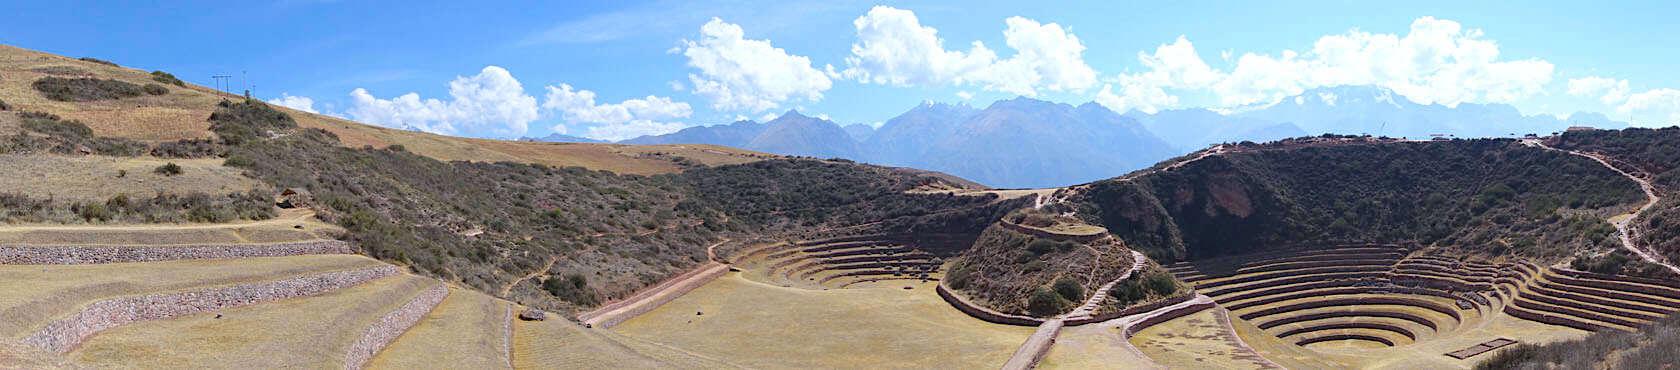 Machu Picchu Panoramaansicht